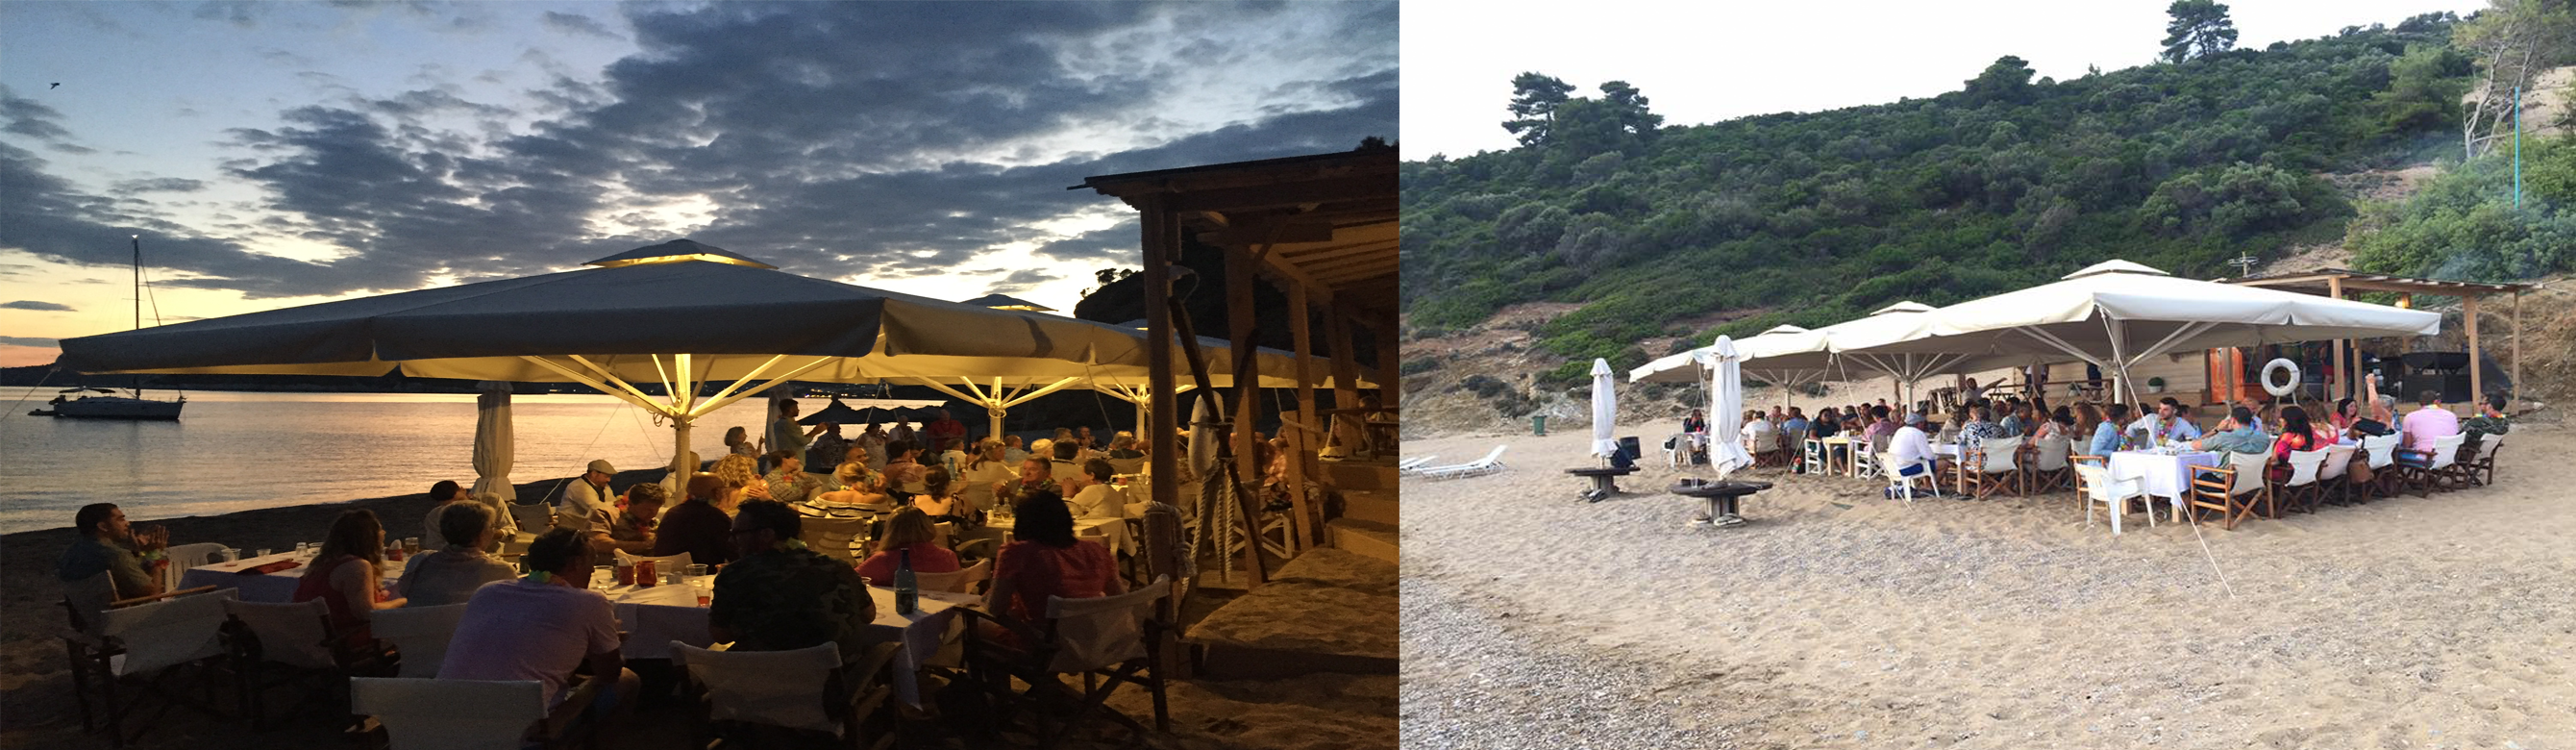 Book your wedding day in Arkos Island Venue